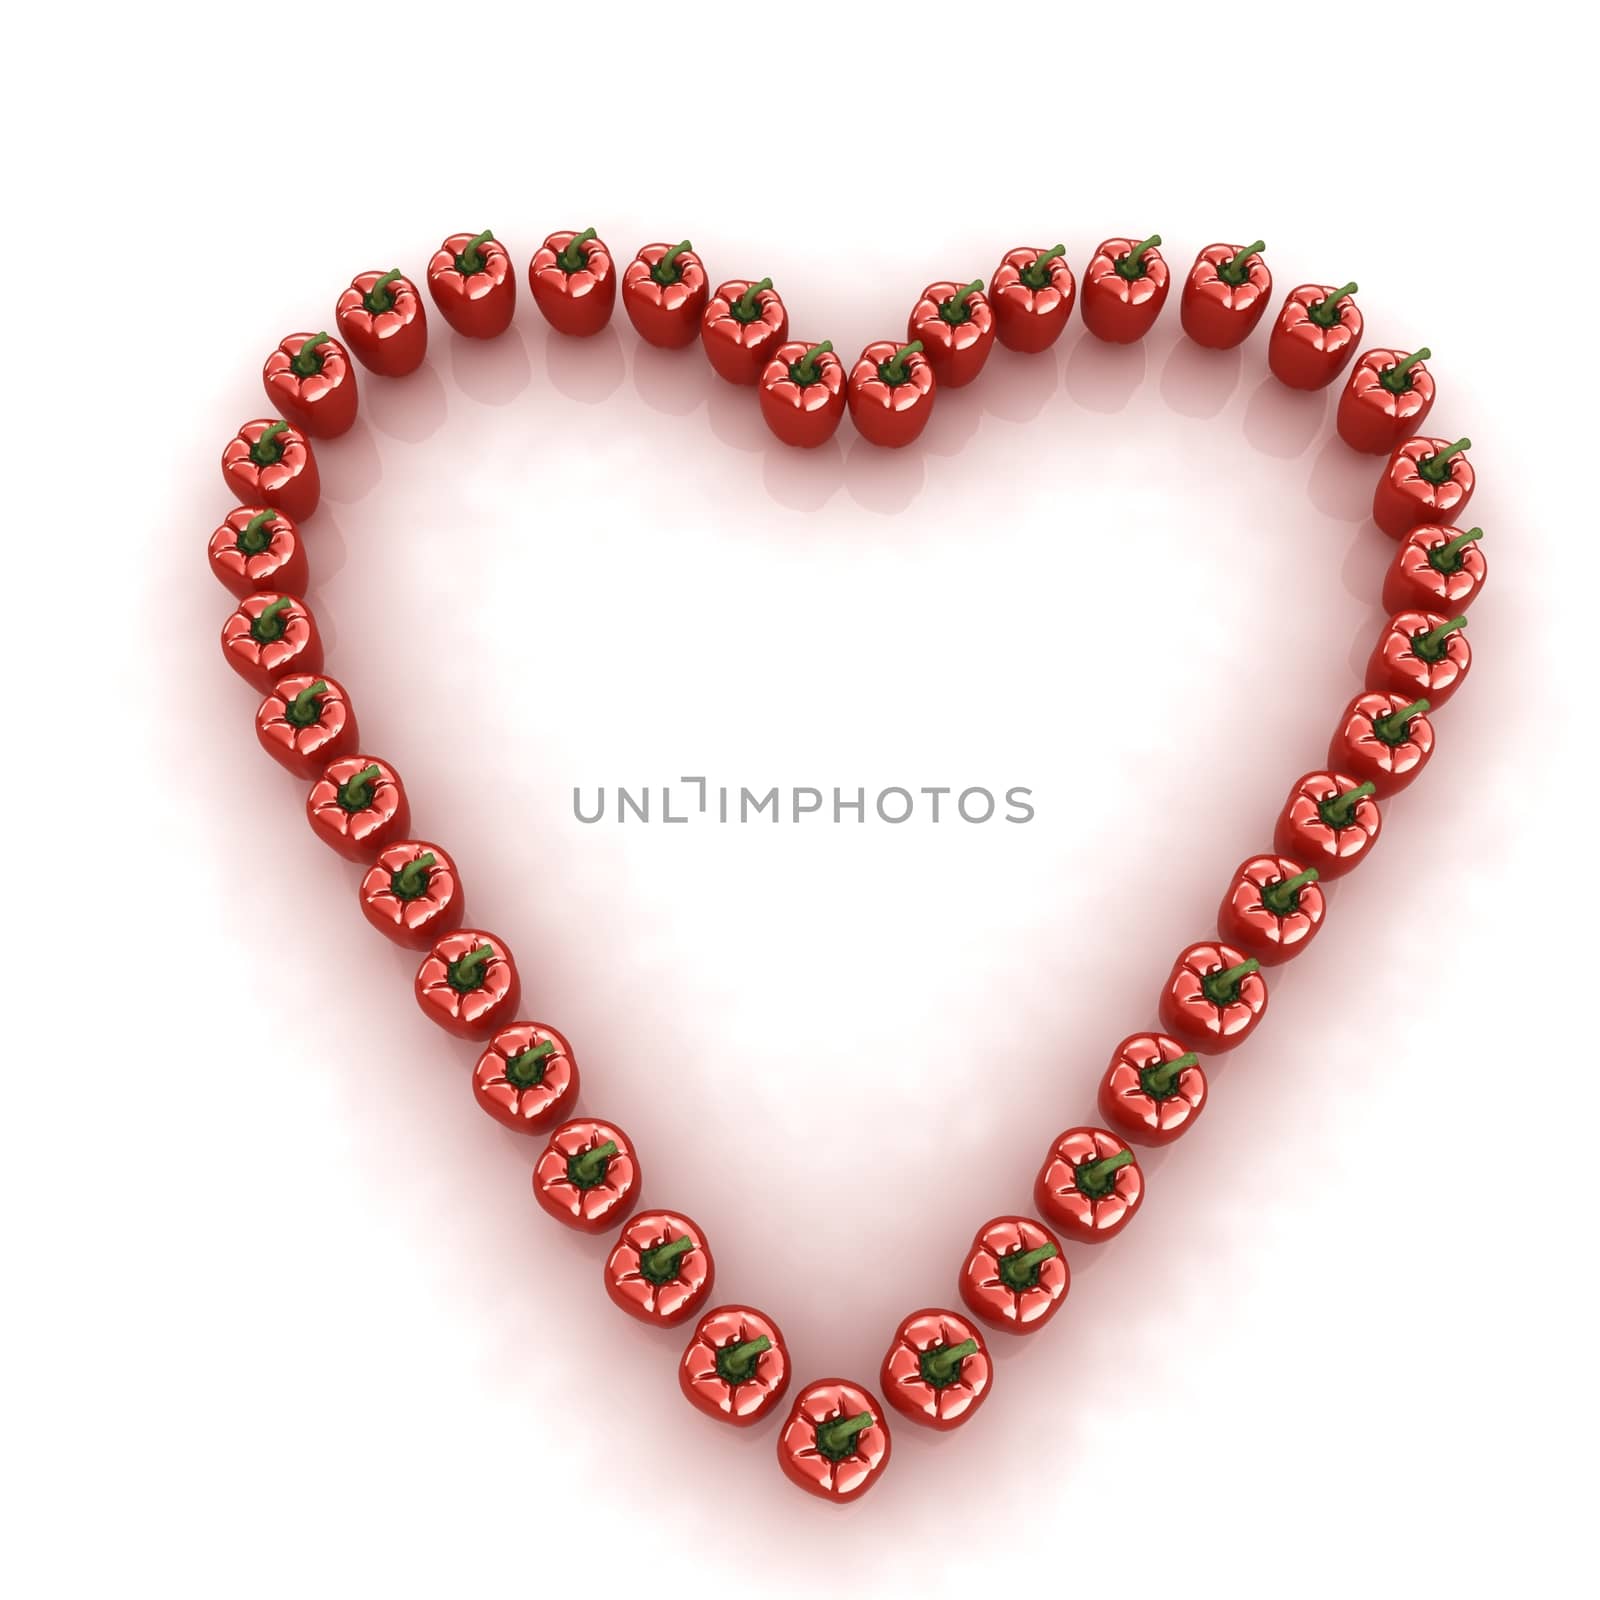 Bulgarian Pepper Heart Shape, On White Background by Guru3D